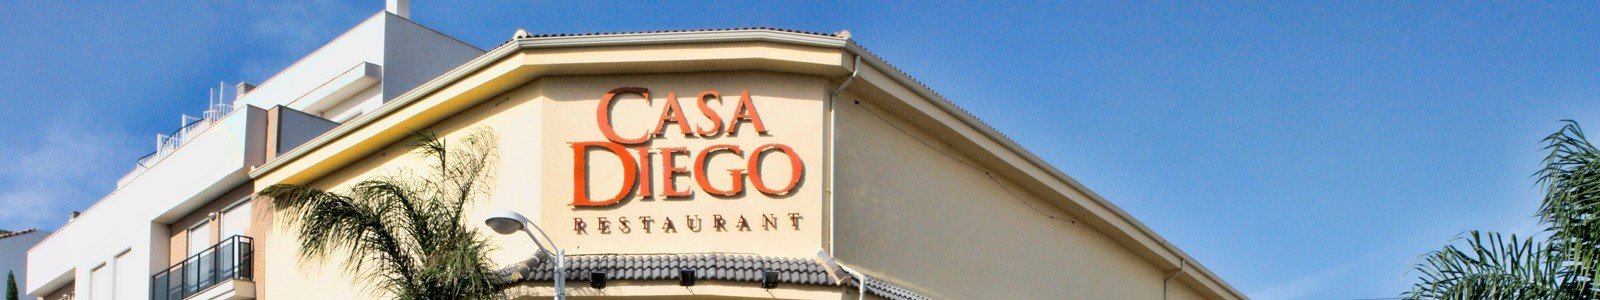 Horario :: Restaurante Casa Diego, Monserrat